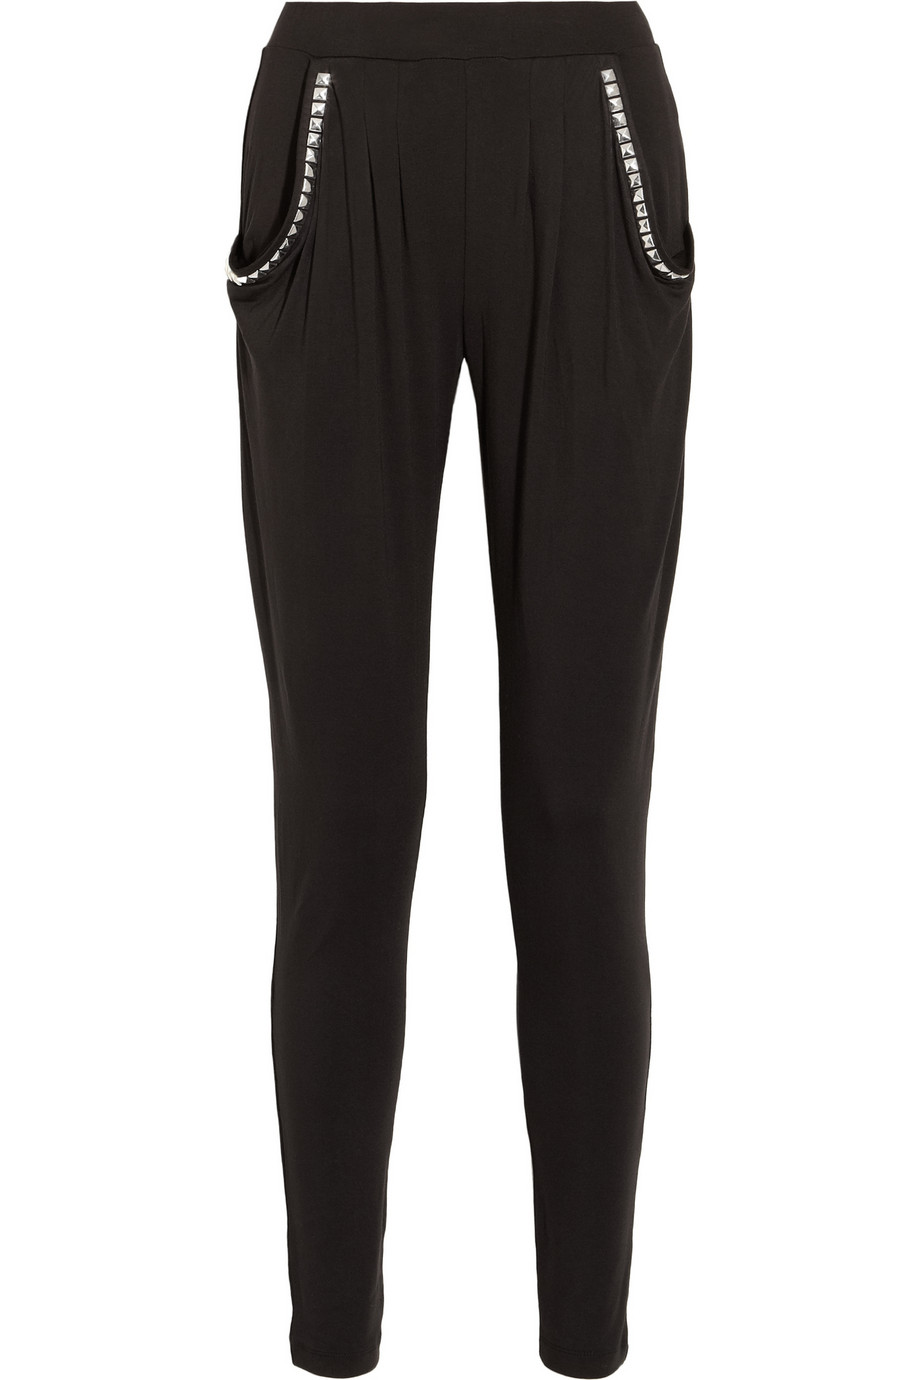 MICHAEL Michael Kors Studded Stretch-Jersey Pants in Black - Lyst